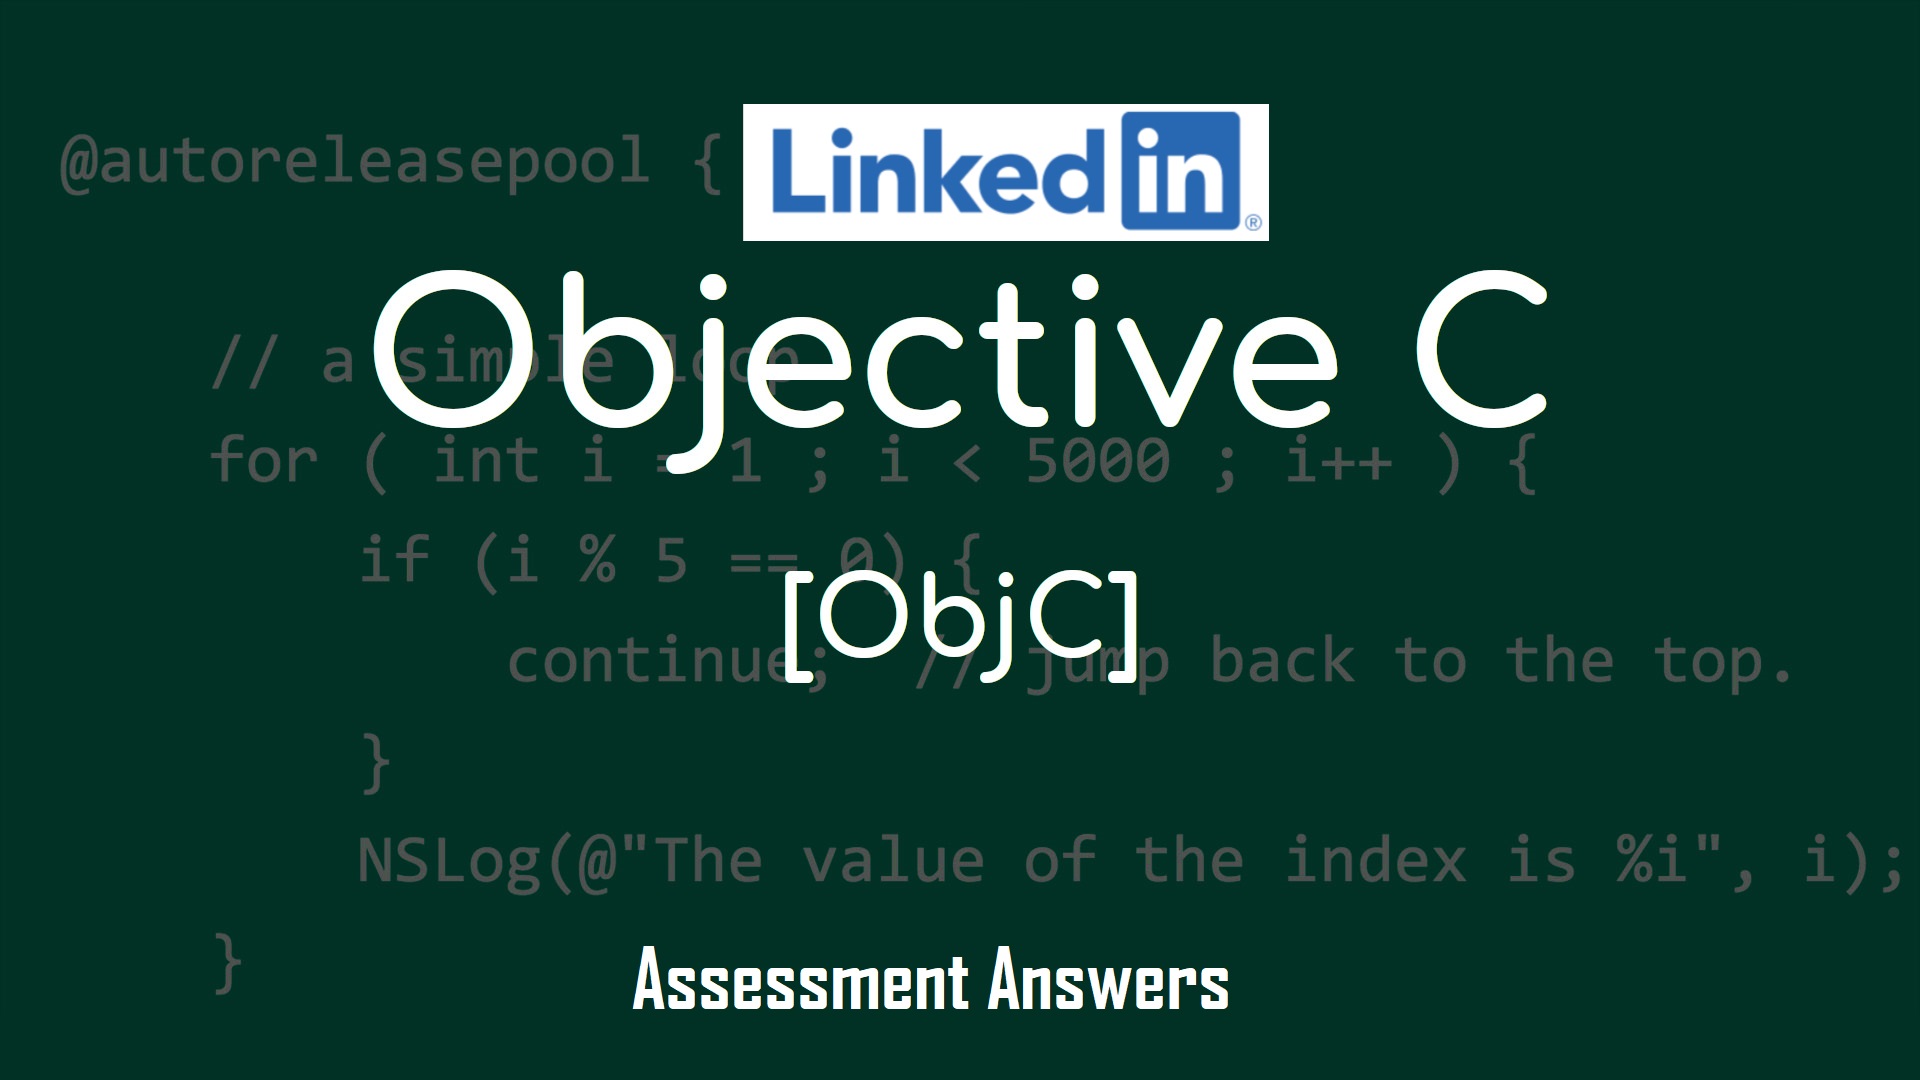 LinkedIn C# Assessment Answers